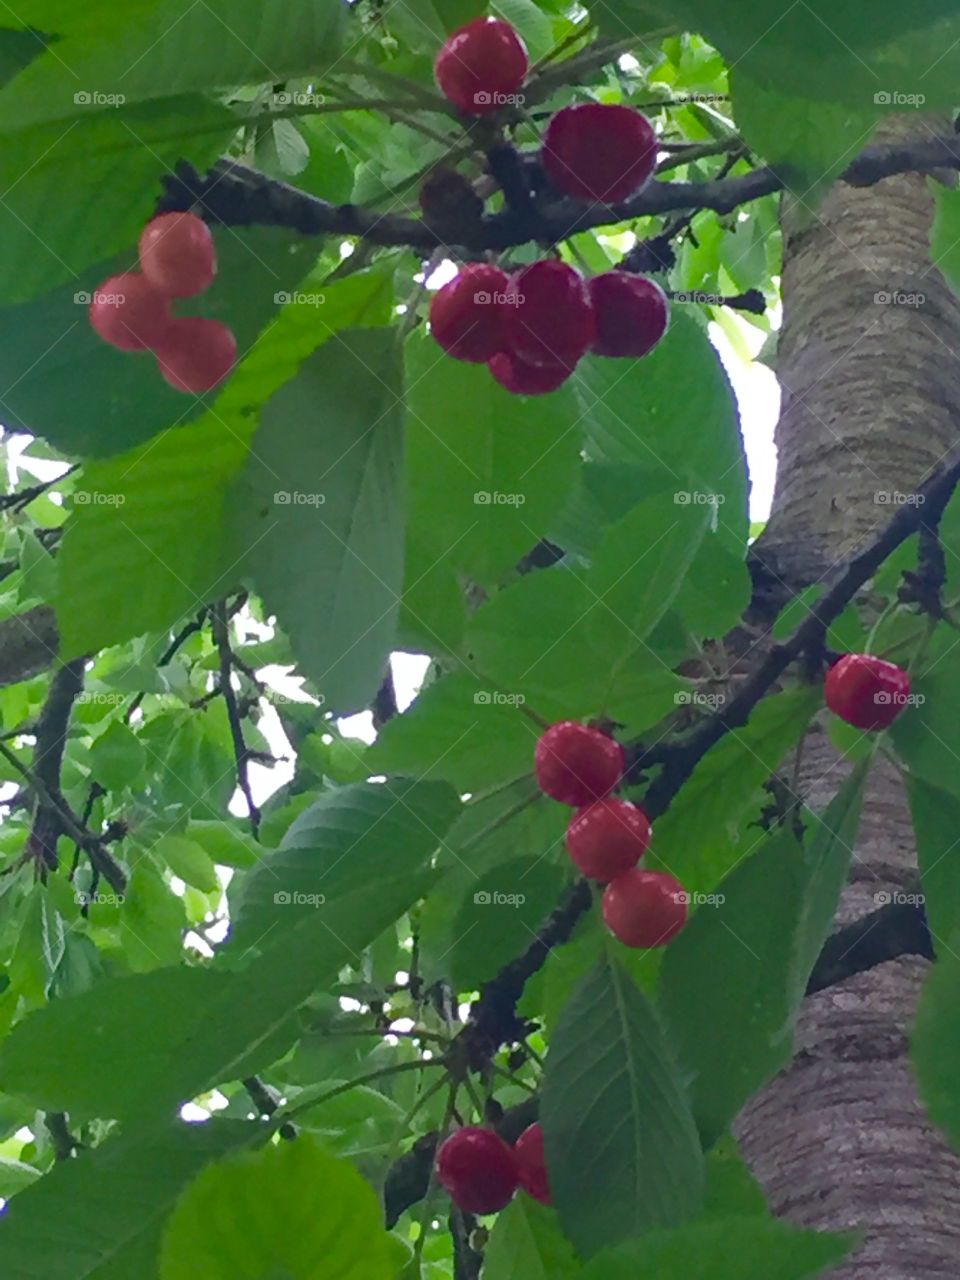 Cherries in a tree